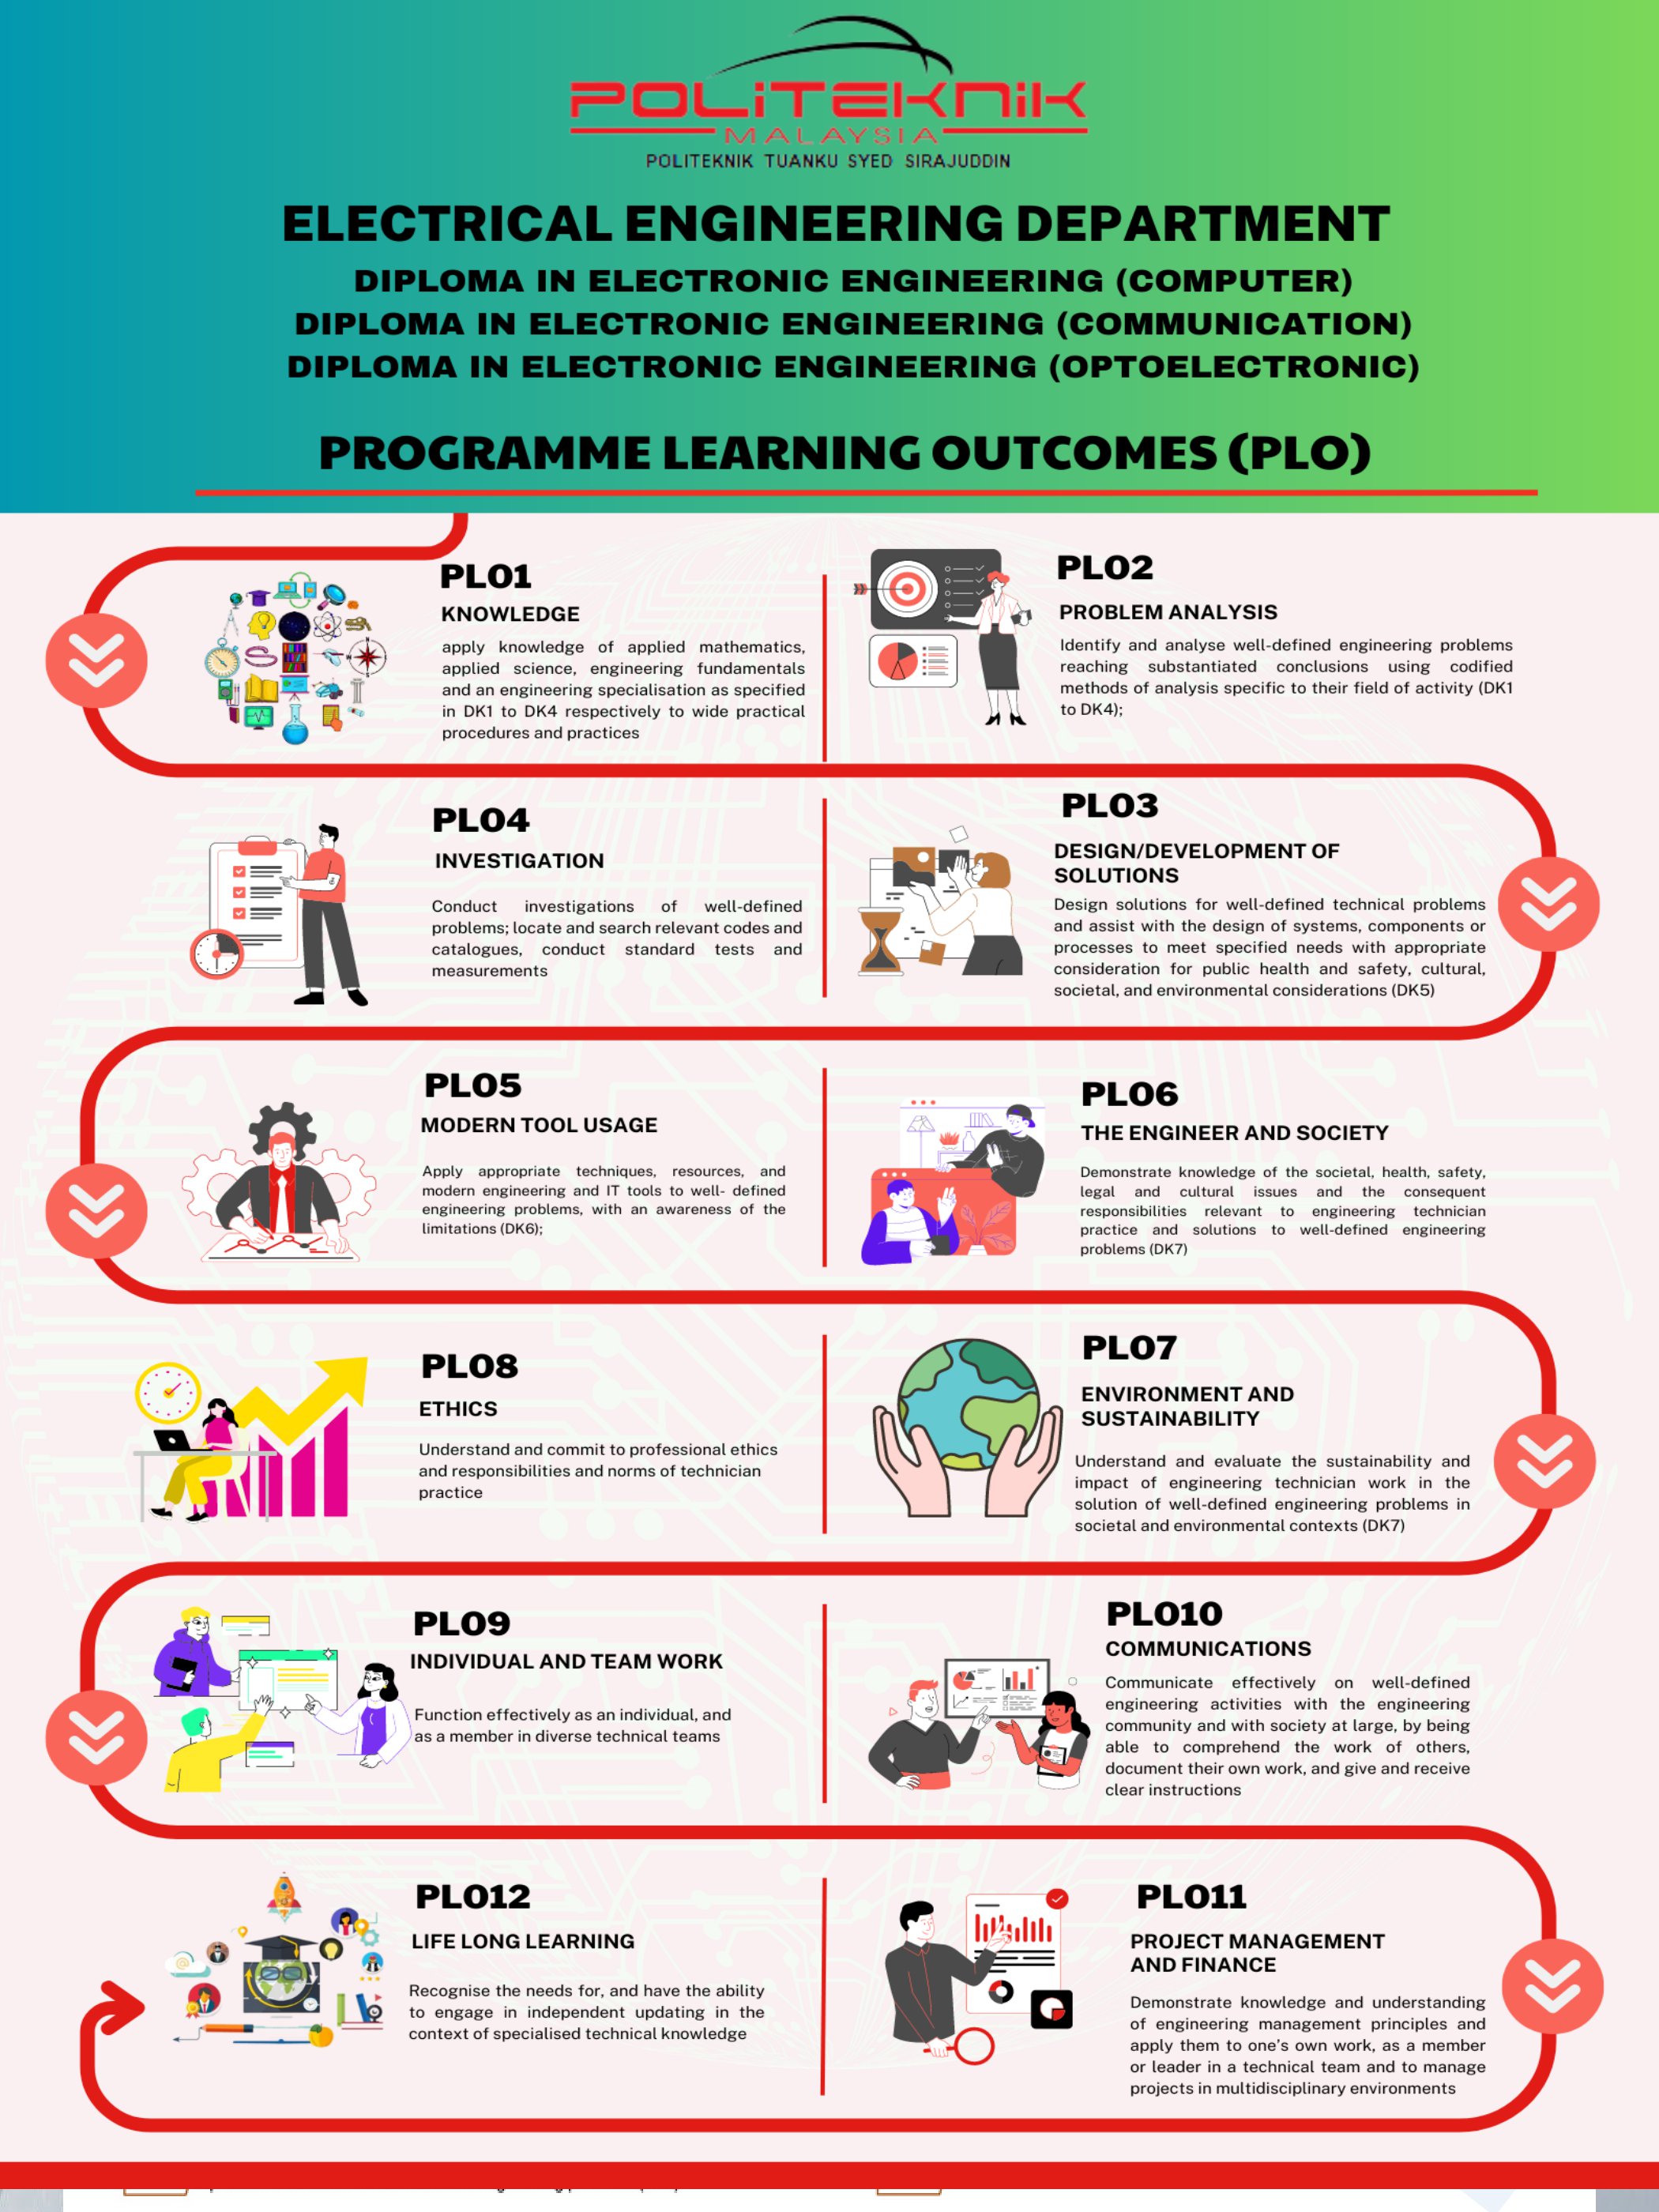 JKE - Programme Learning Outcomes (PLO)